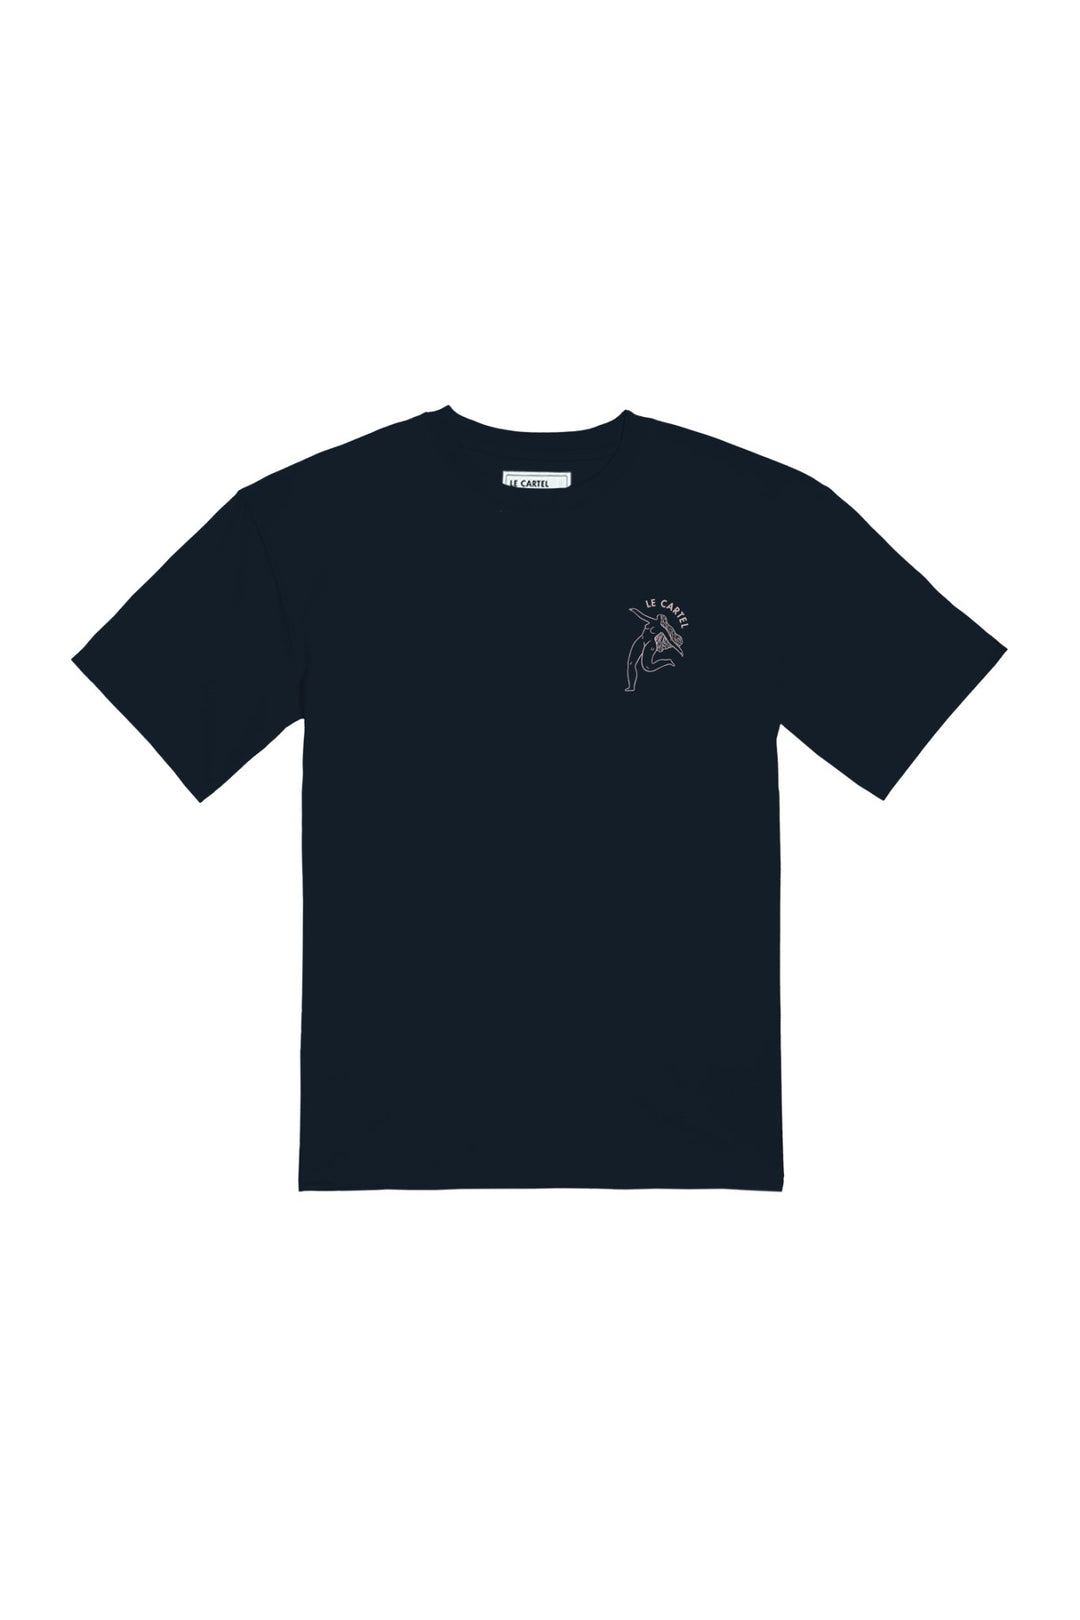 FONTAINE・T - shirt unisexe・Bleu marin - Le Cartel